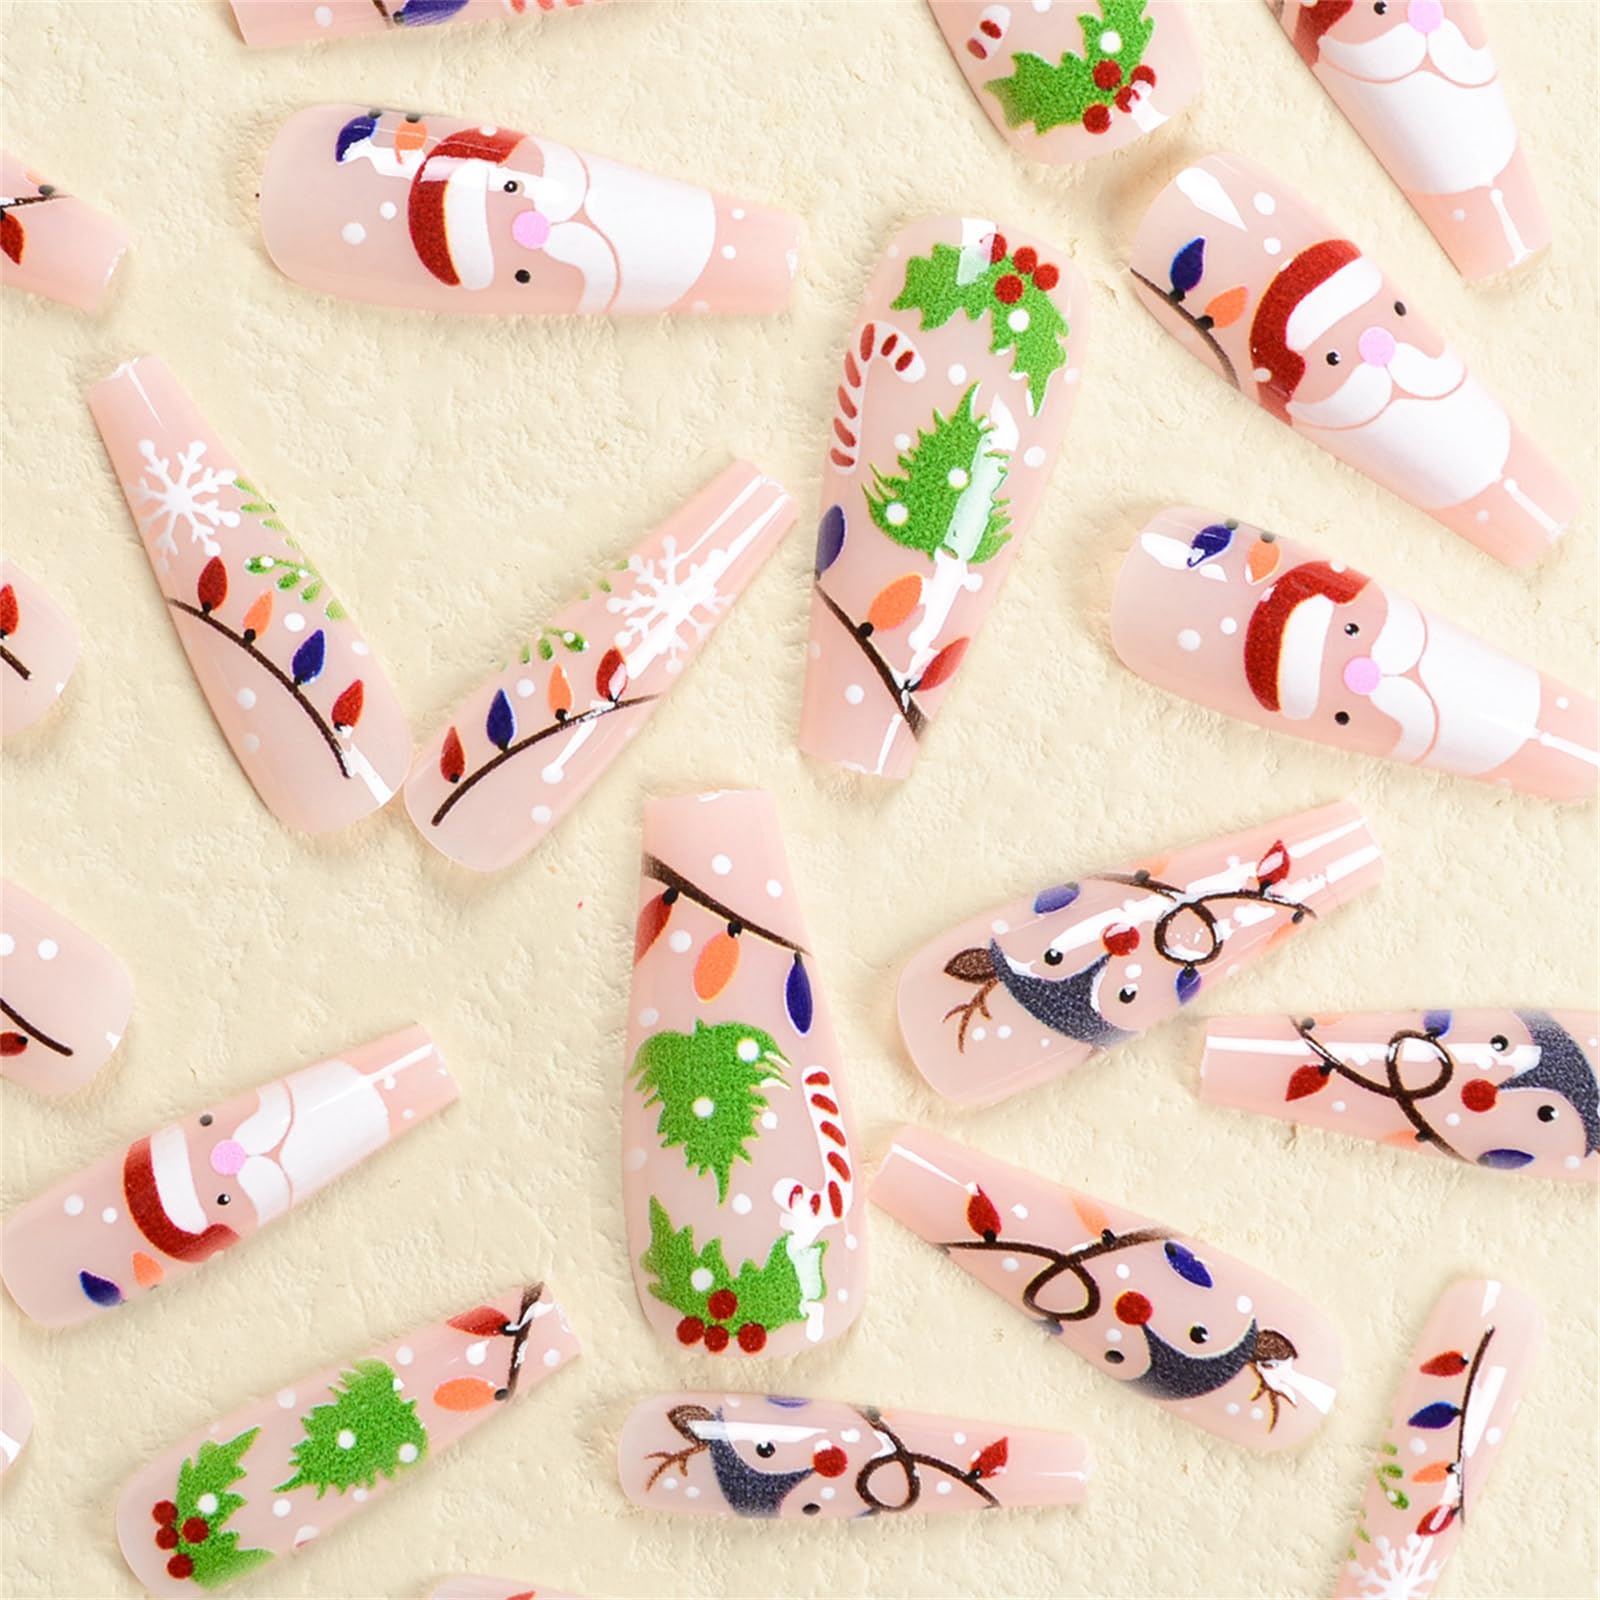 24 Pcs Christmas False Nails Long - Press on Nails with Santa Claus and Elk - Nude Pink Coffin Fake Nails Medium Length with Jelly Glue - Festival Holiday Nails Fake Nail for Nails Art